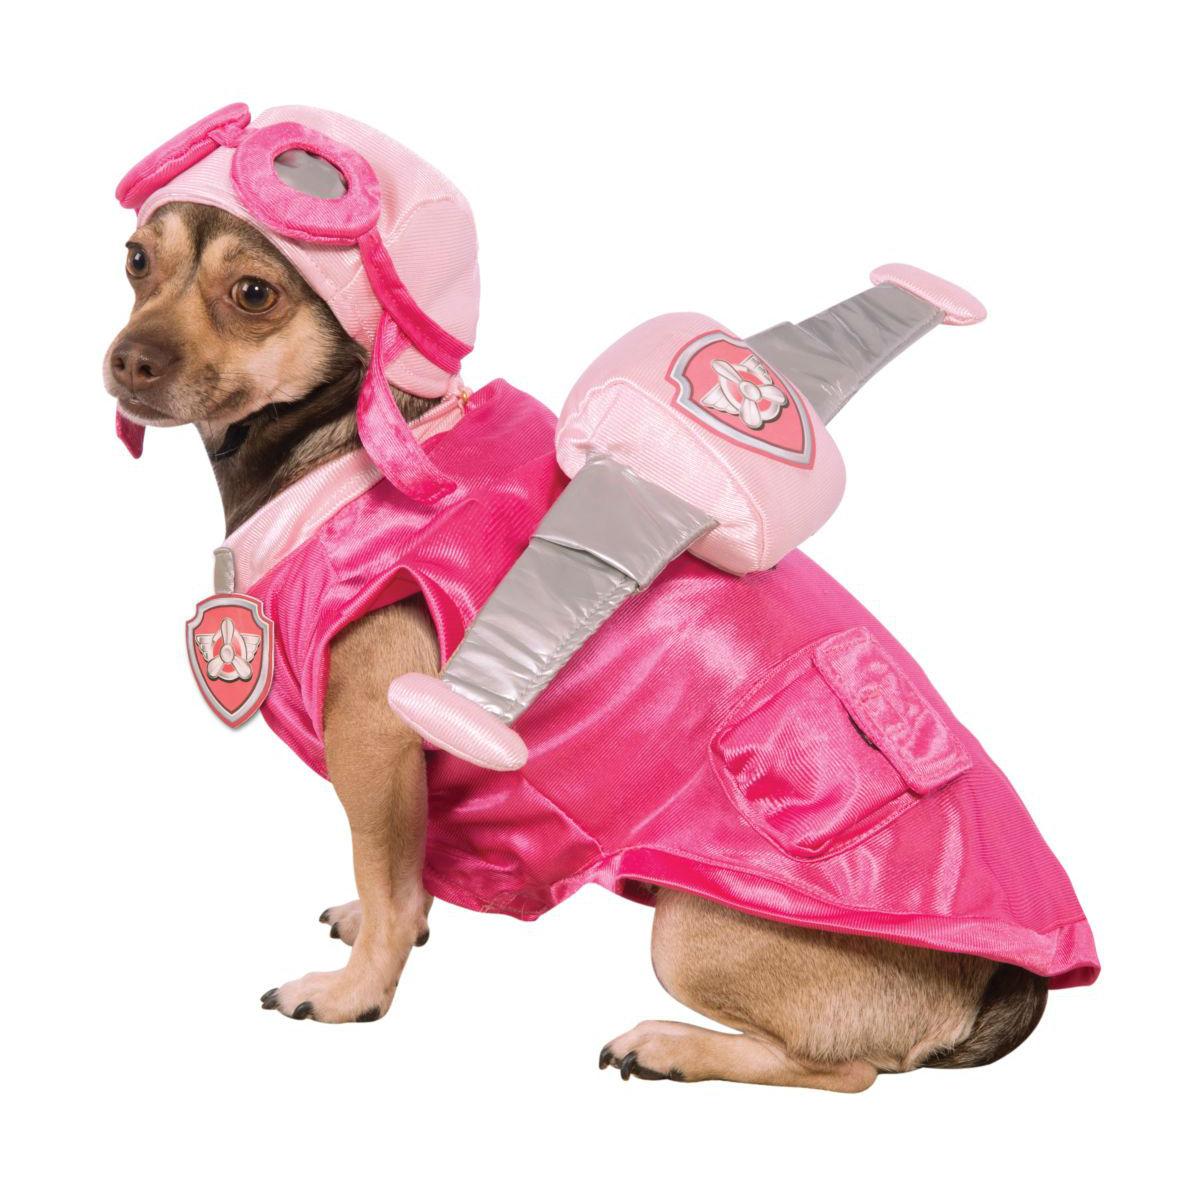 Paw Patrol Skye Dog Costume by Rubies